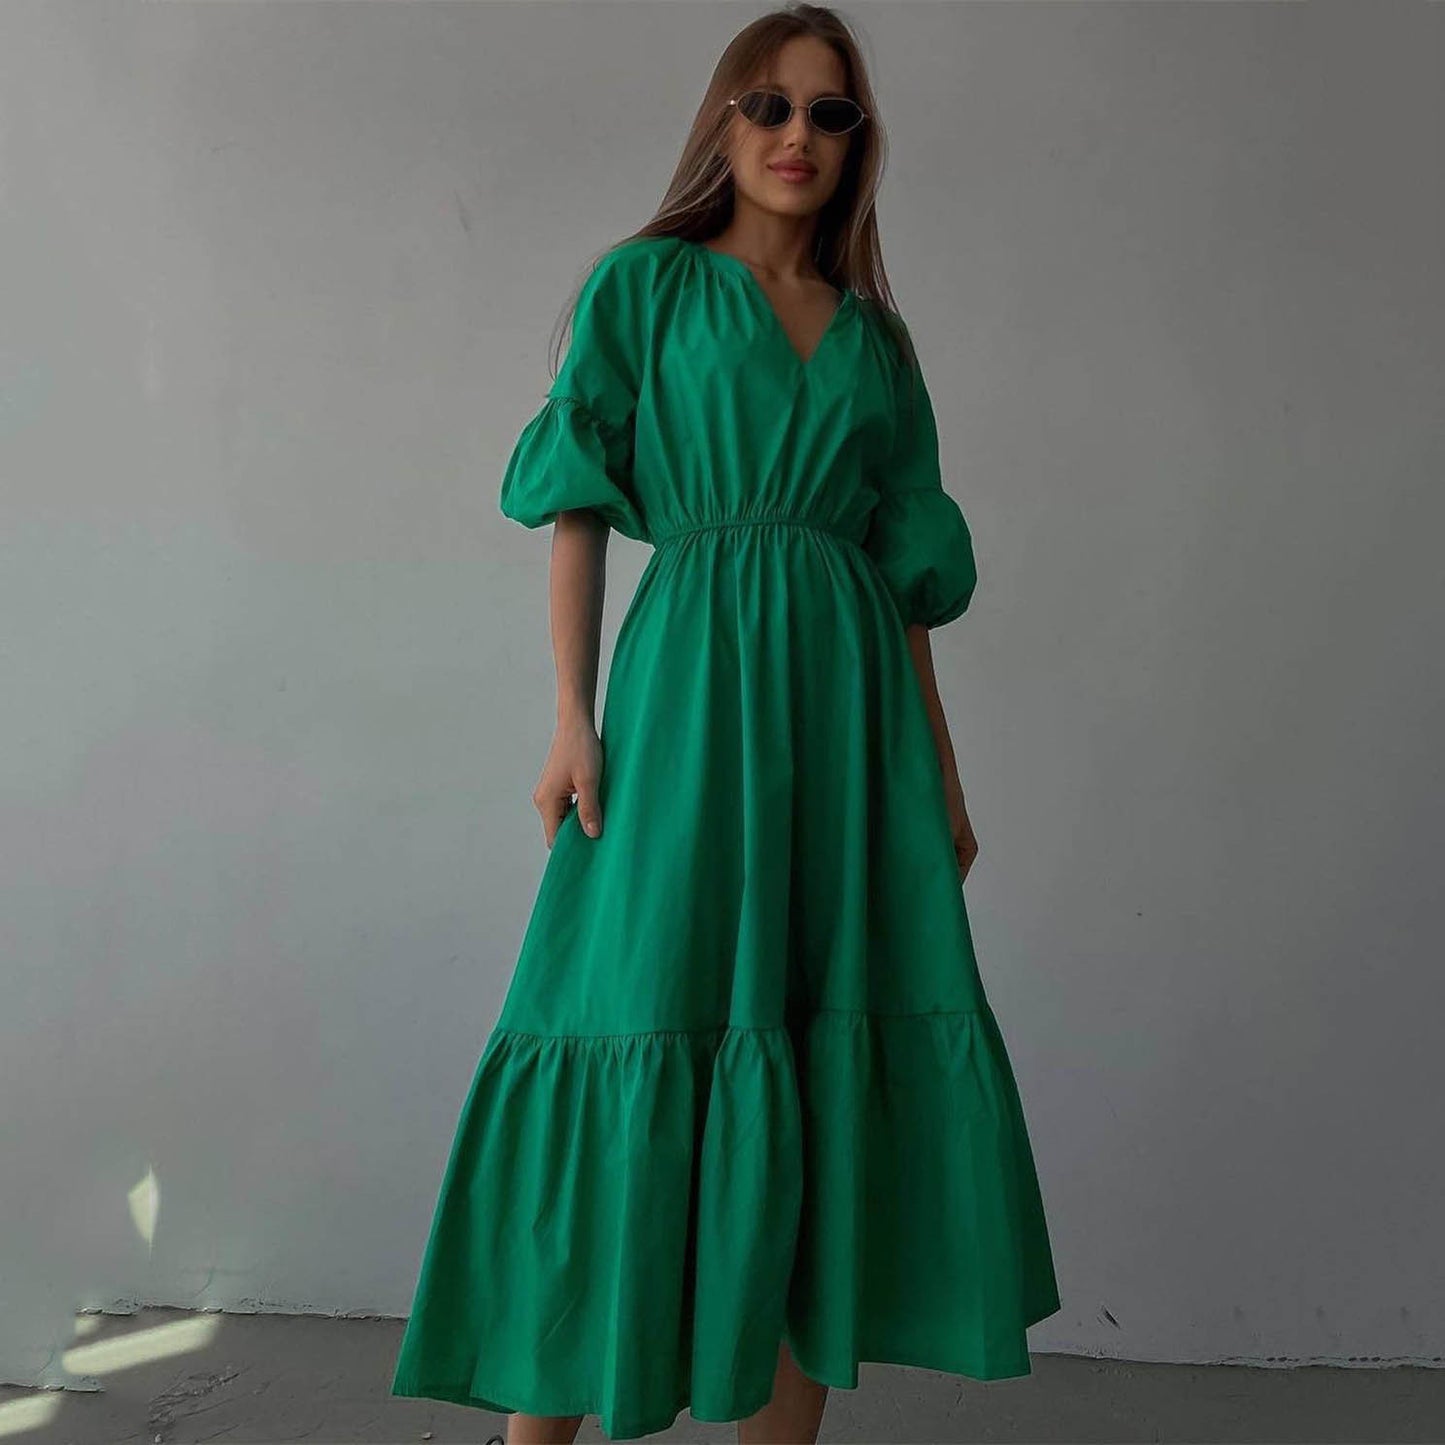 Elegant Summer Dresses | V neck High Waist French Cotton Dress